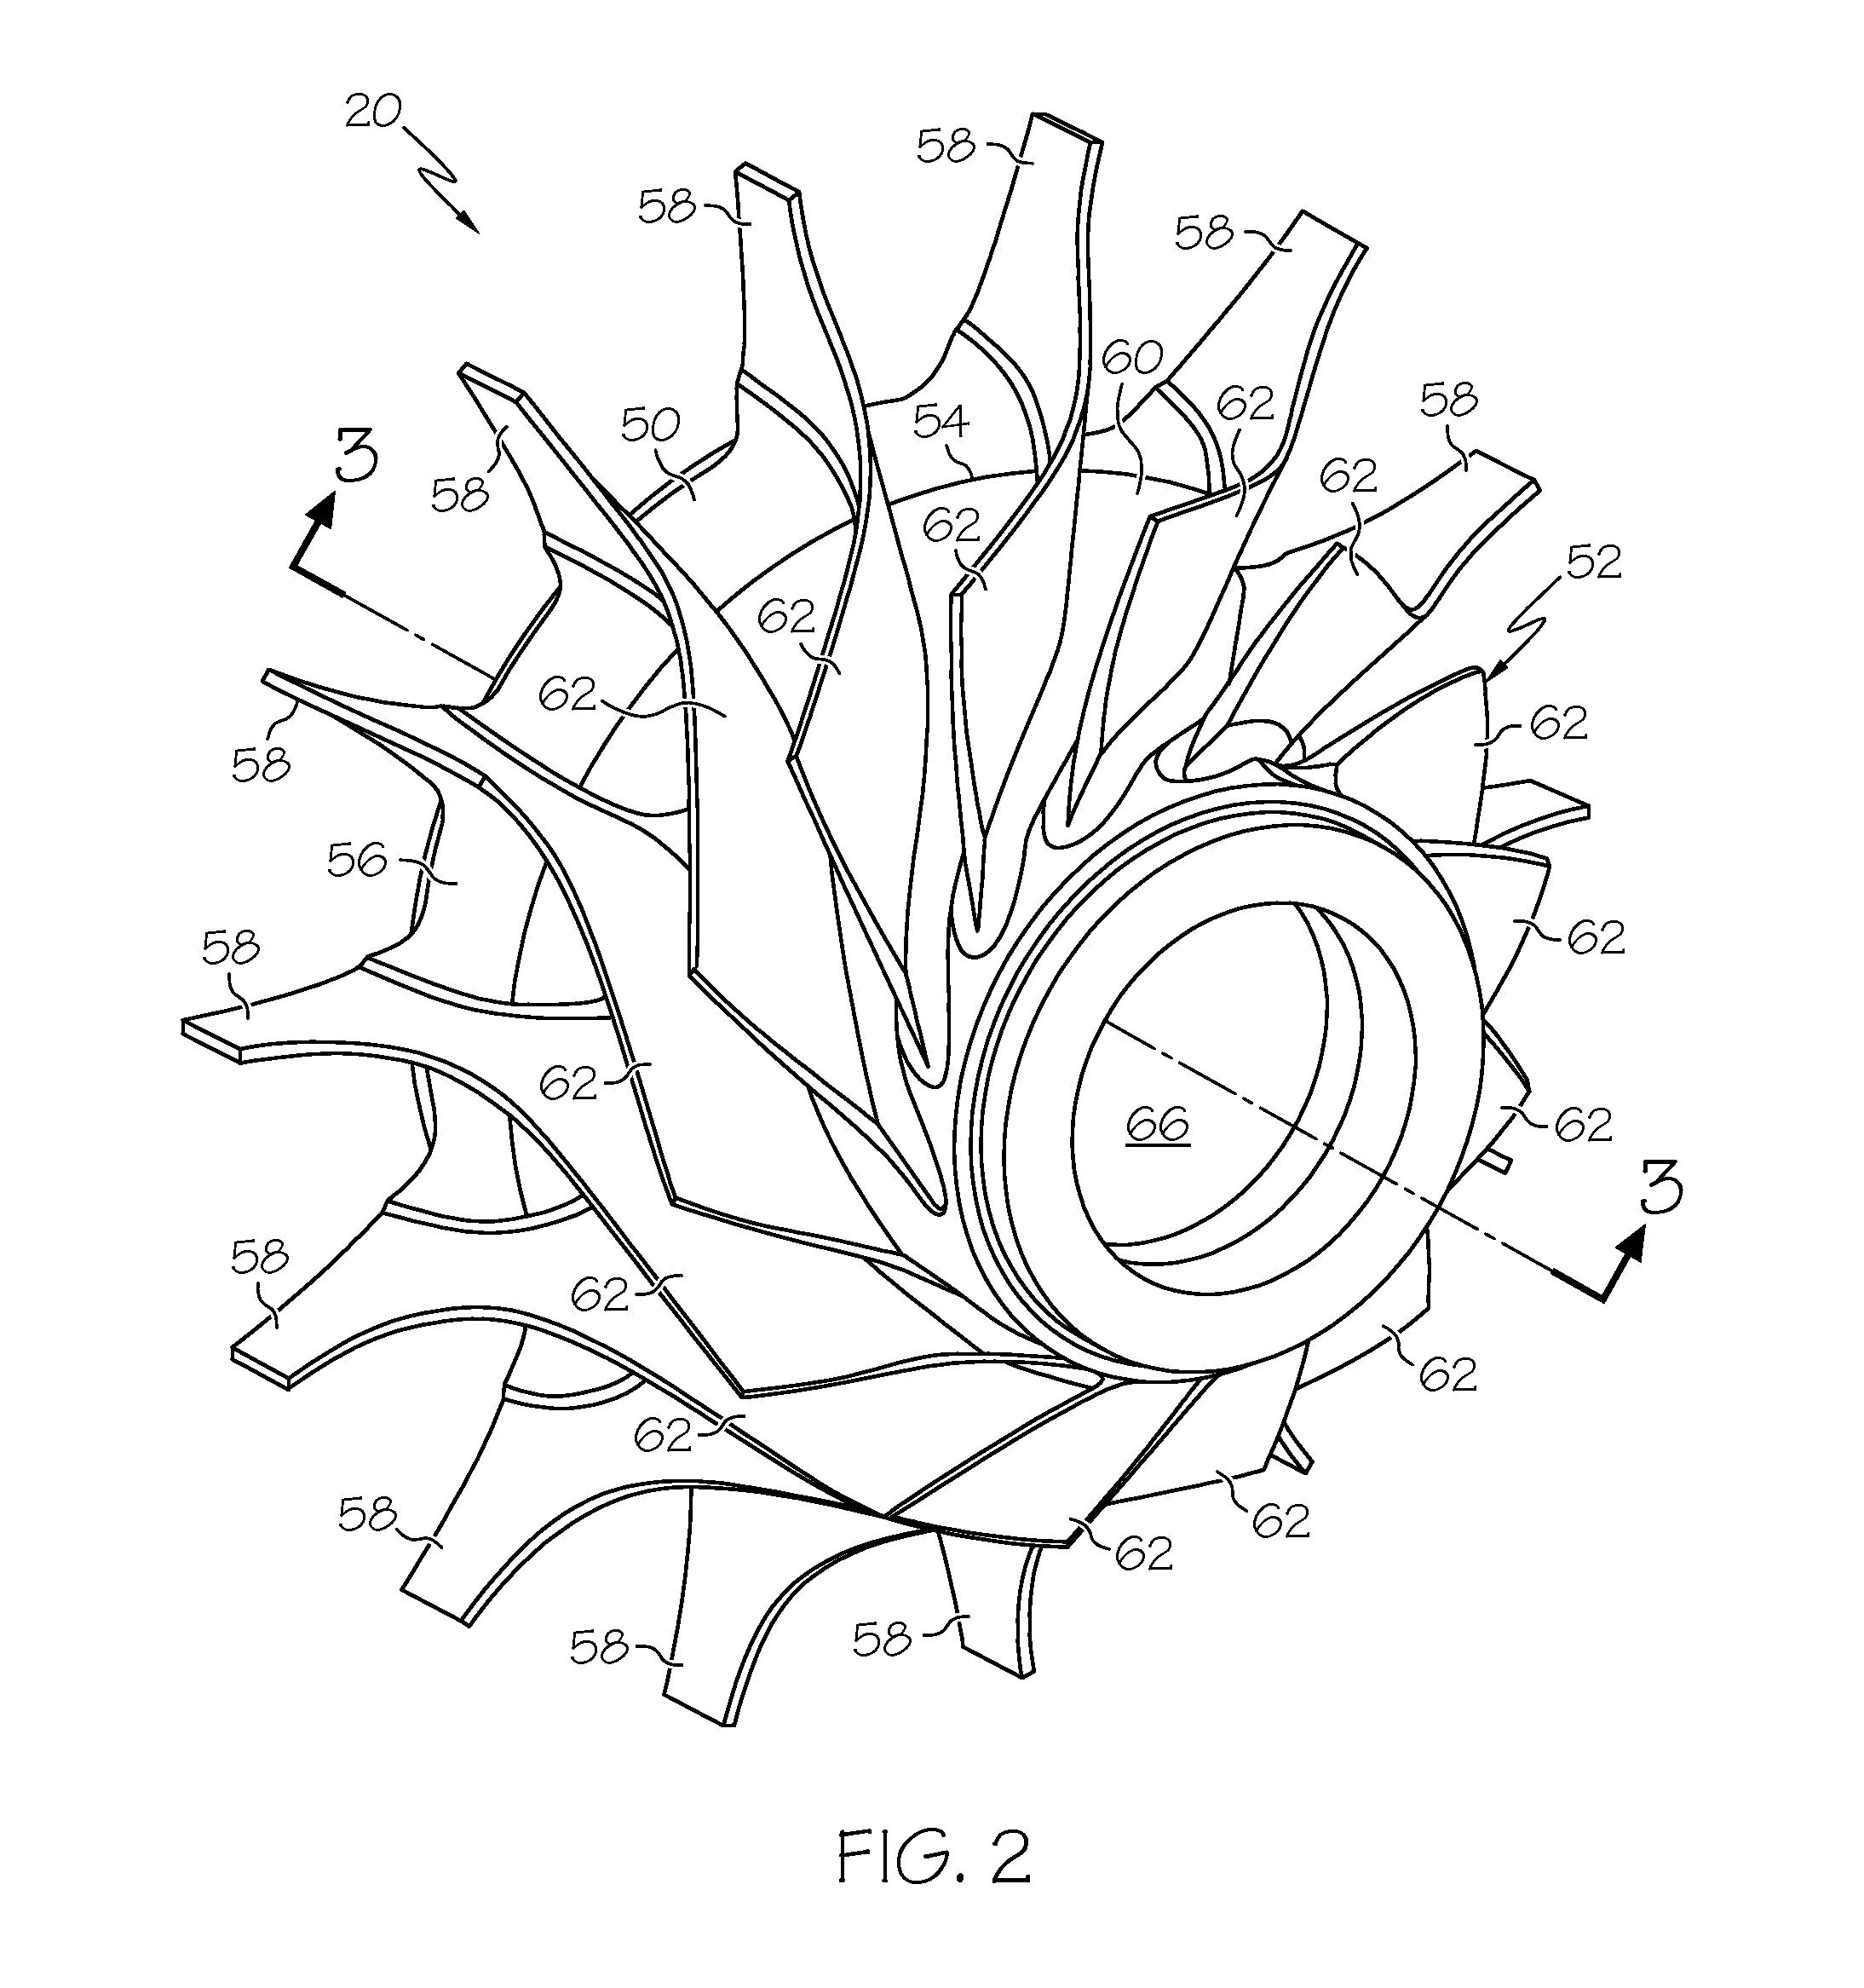 Axially-split radial turbine